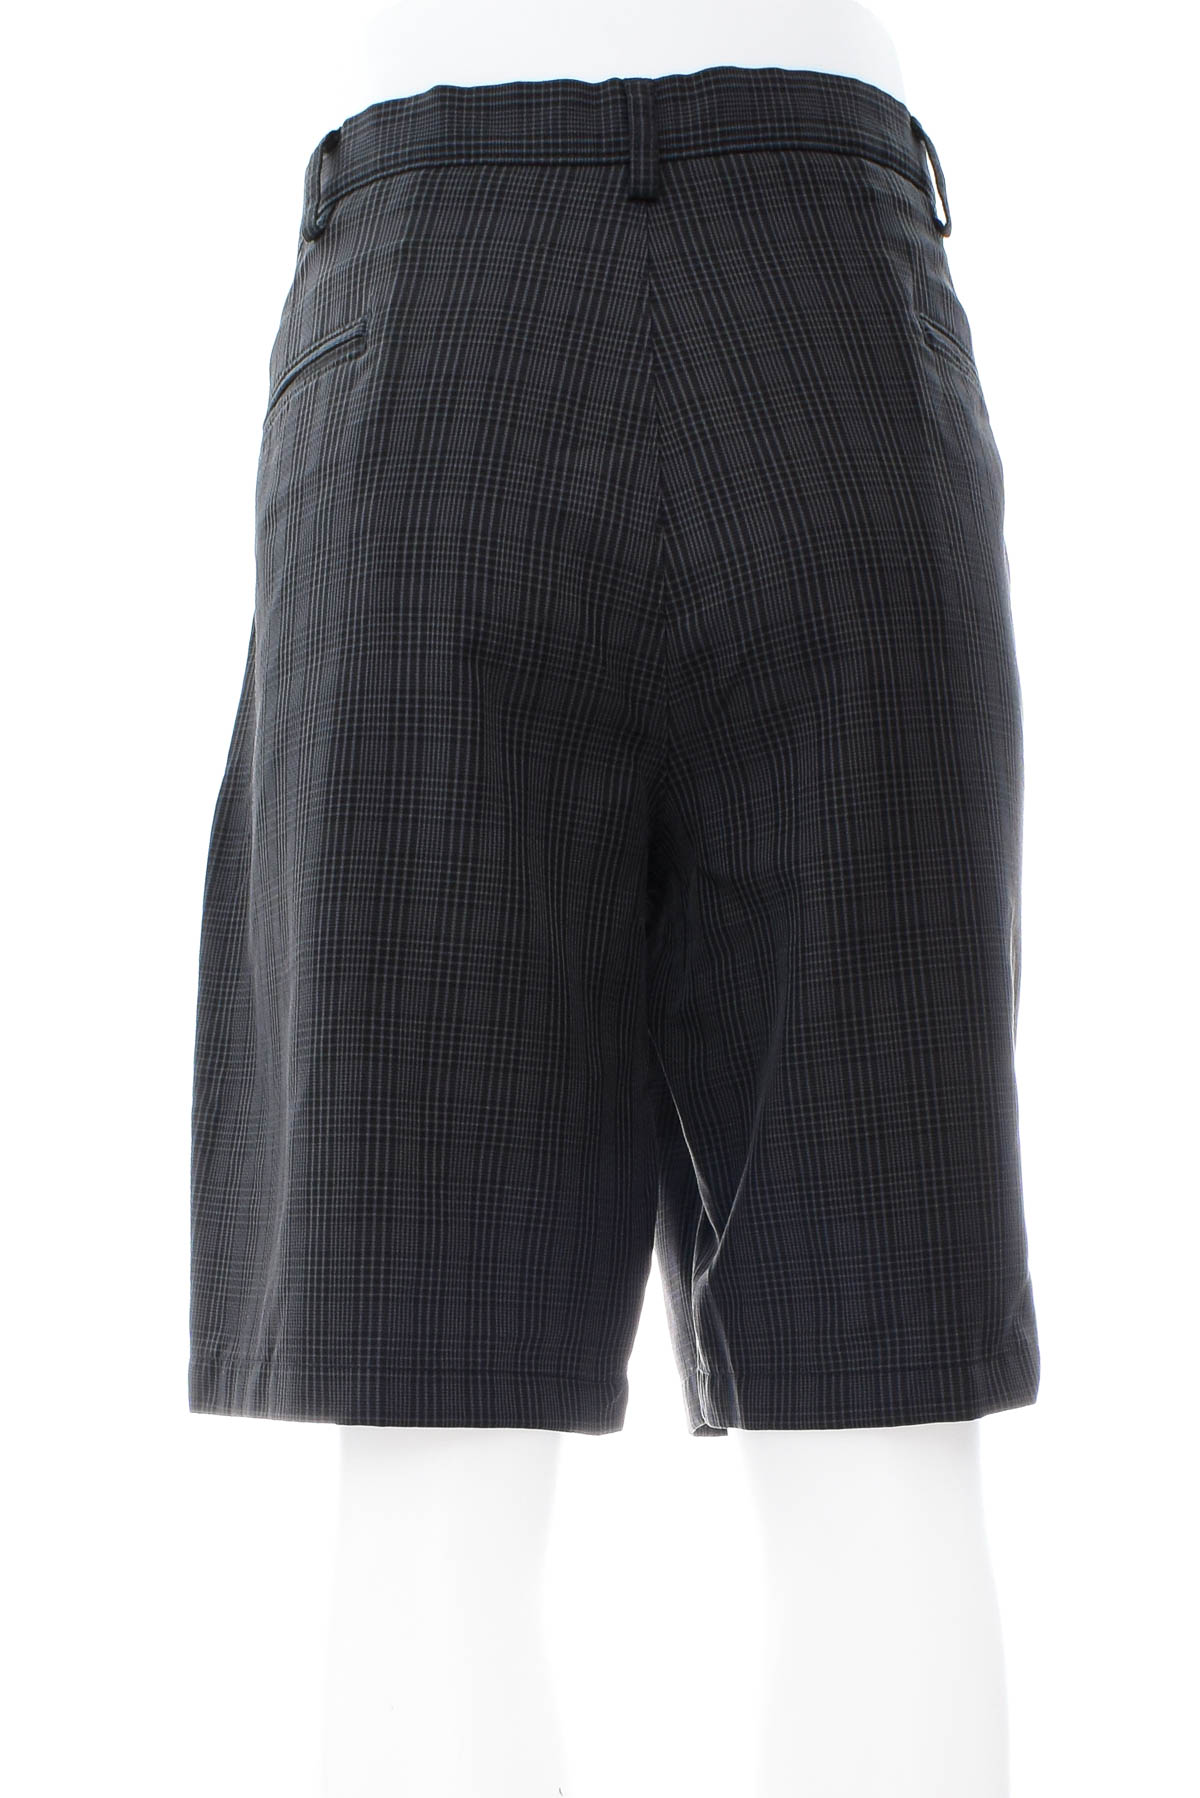 Men's shorts - HAGGAR - 1